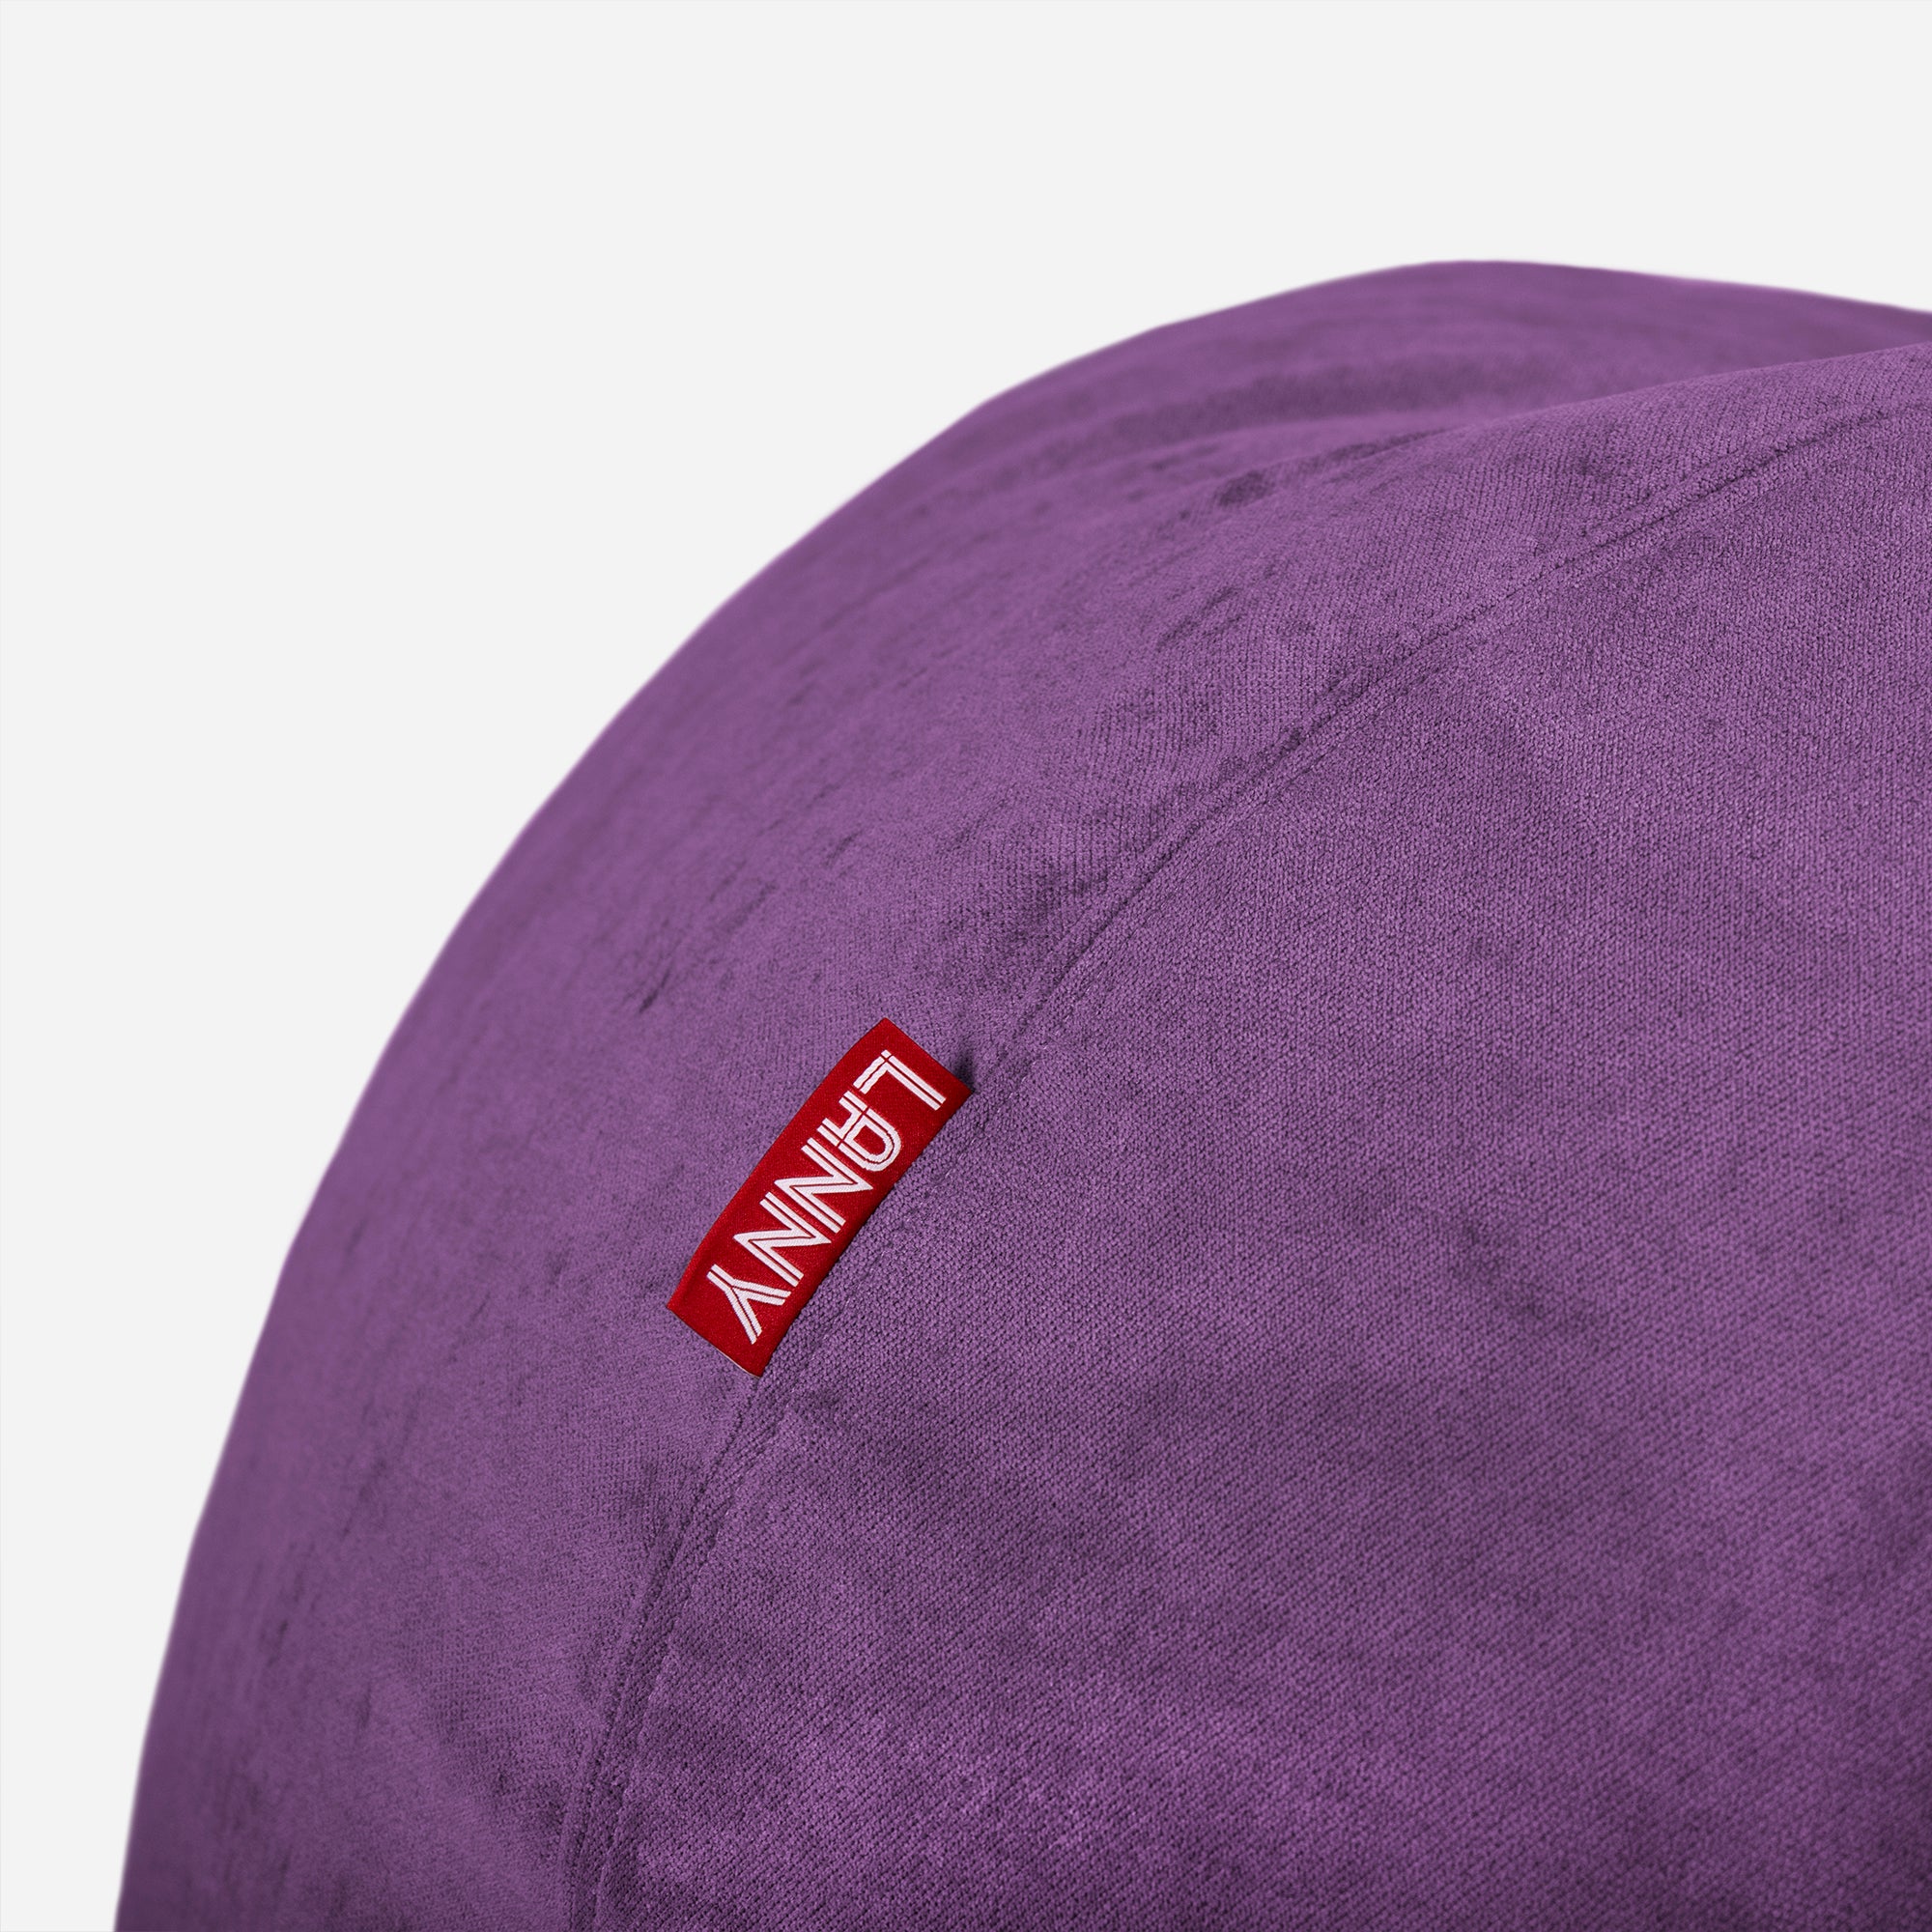 Sphere Aldo Violet Bean bag